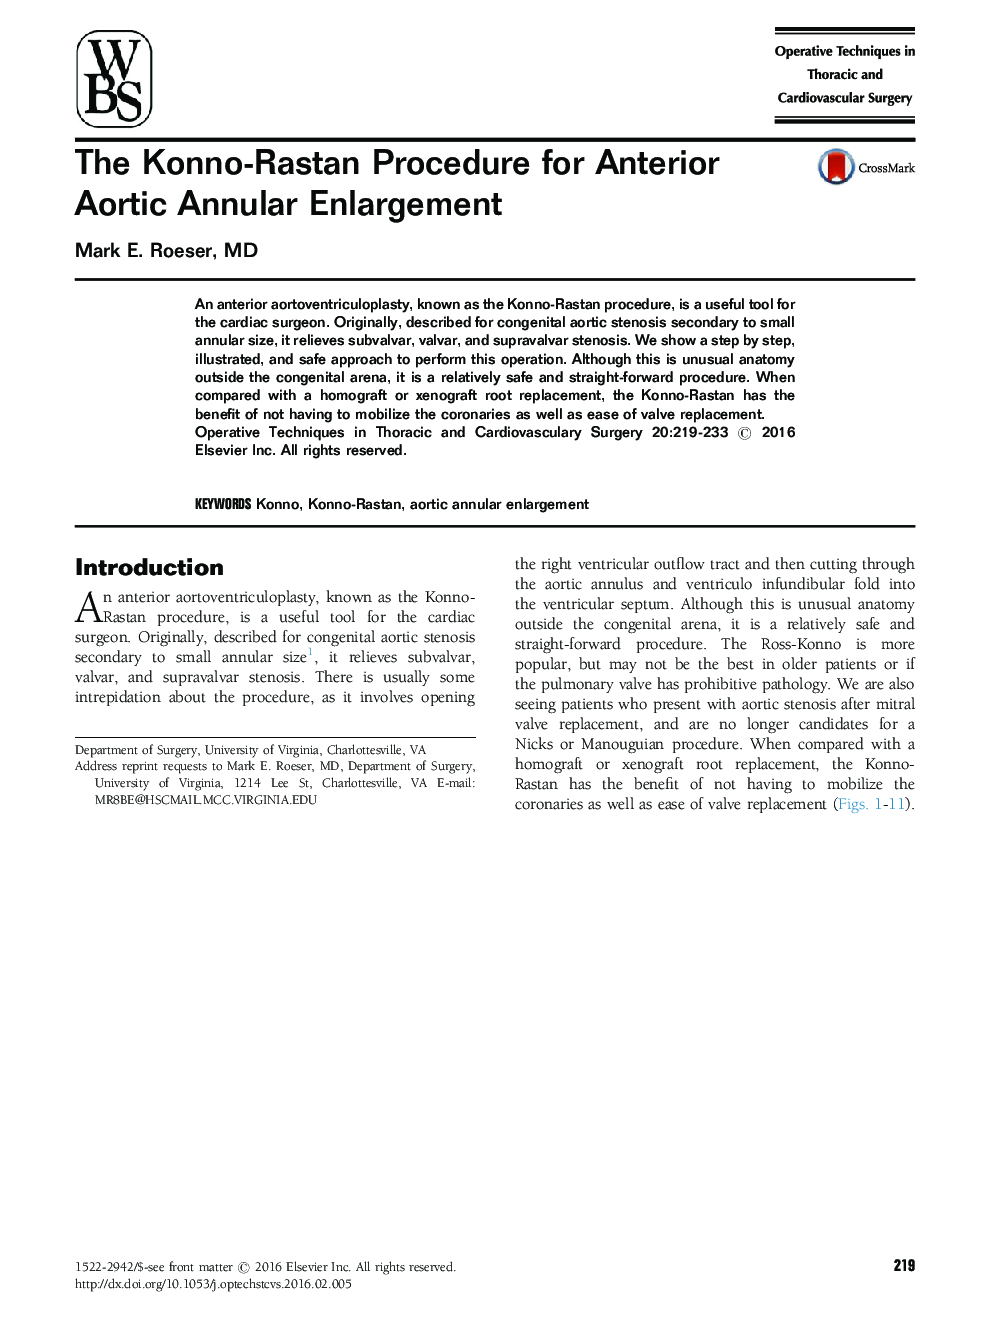 The Konno-Rastan Procedure for Anterior Aortic Annular Enlargement